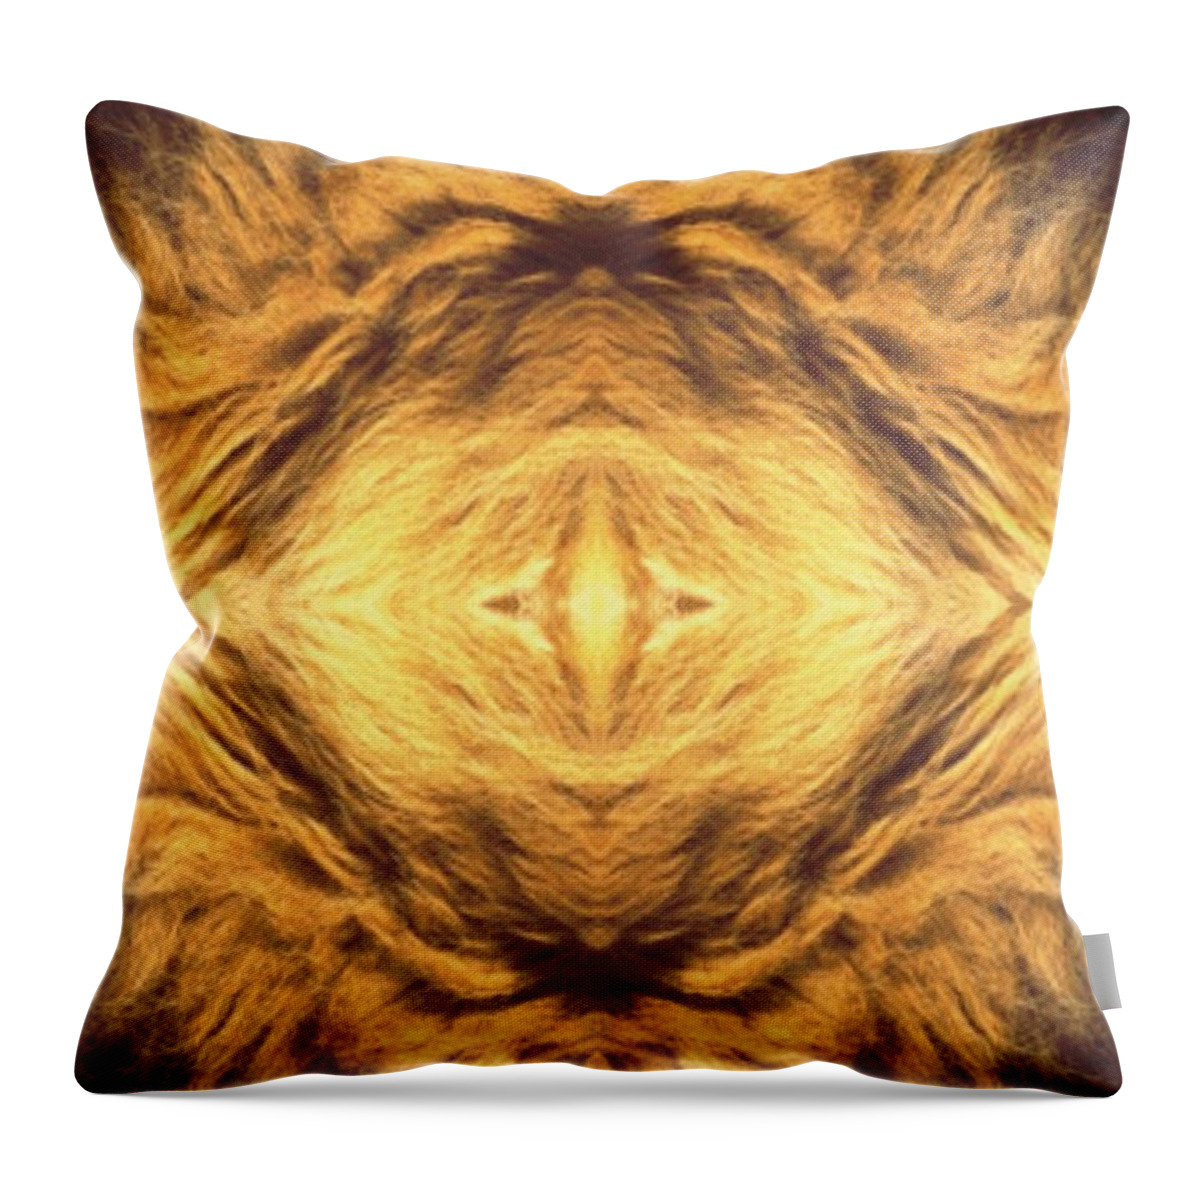 Digital Throw Pillow featuring the digital art Lion's Eye by Maria Watt